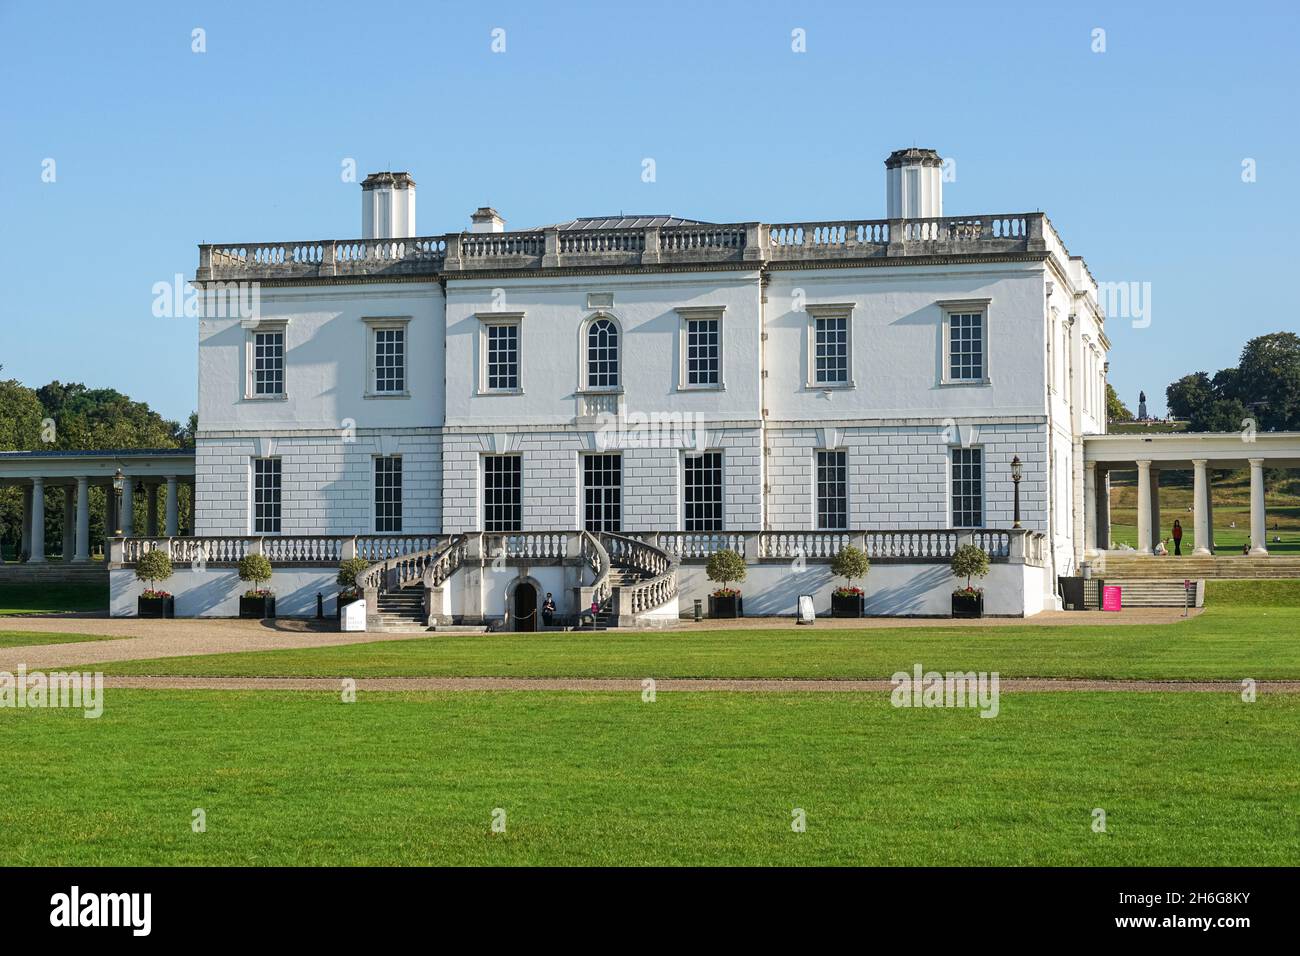 Queen's House, ancienne résidence royale de Greenwich, Londres, Angleterre, Royaume-Uni Banque D'Images